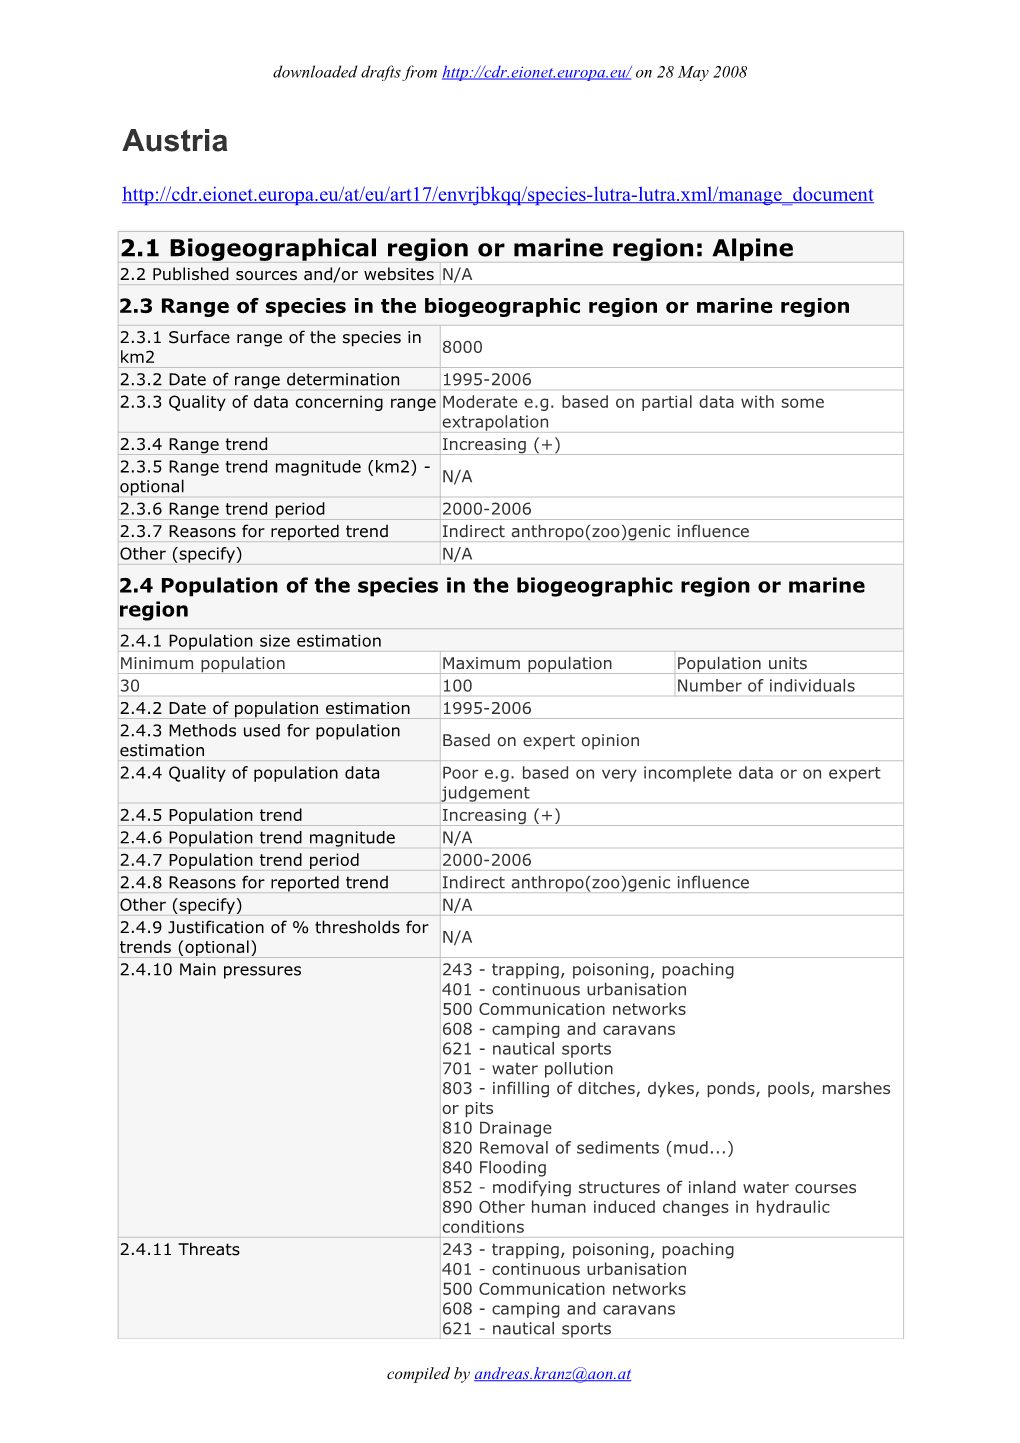 2.1 Biogeographical Region Or Marine Region: Alpine